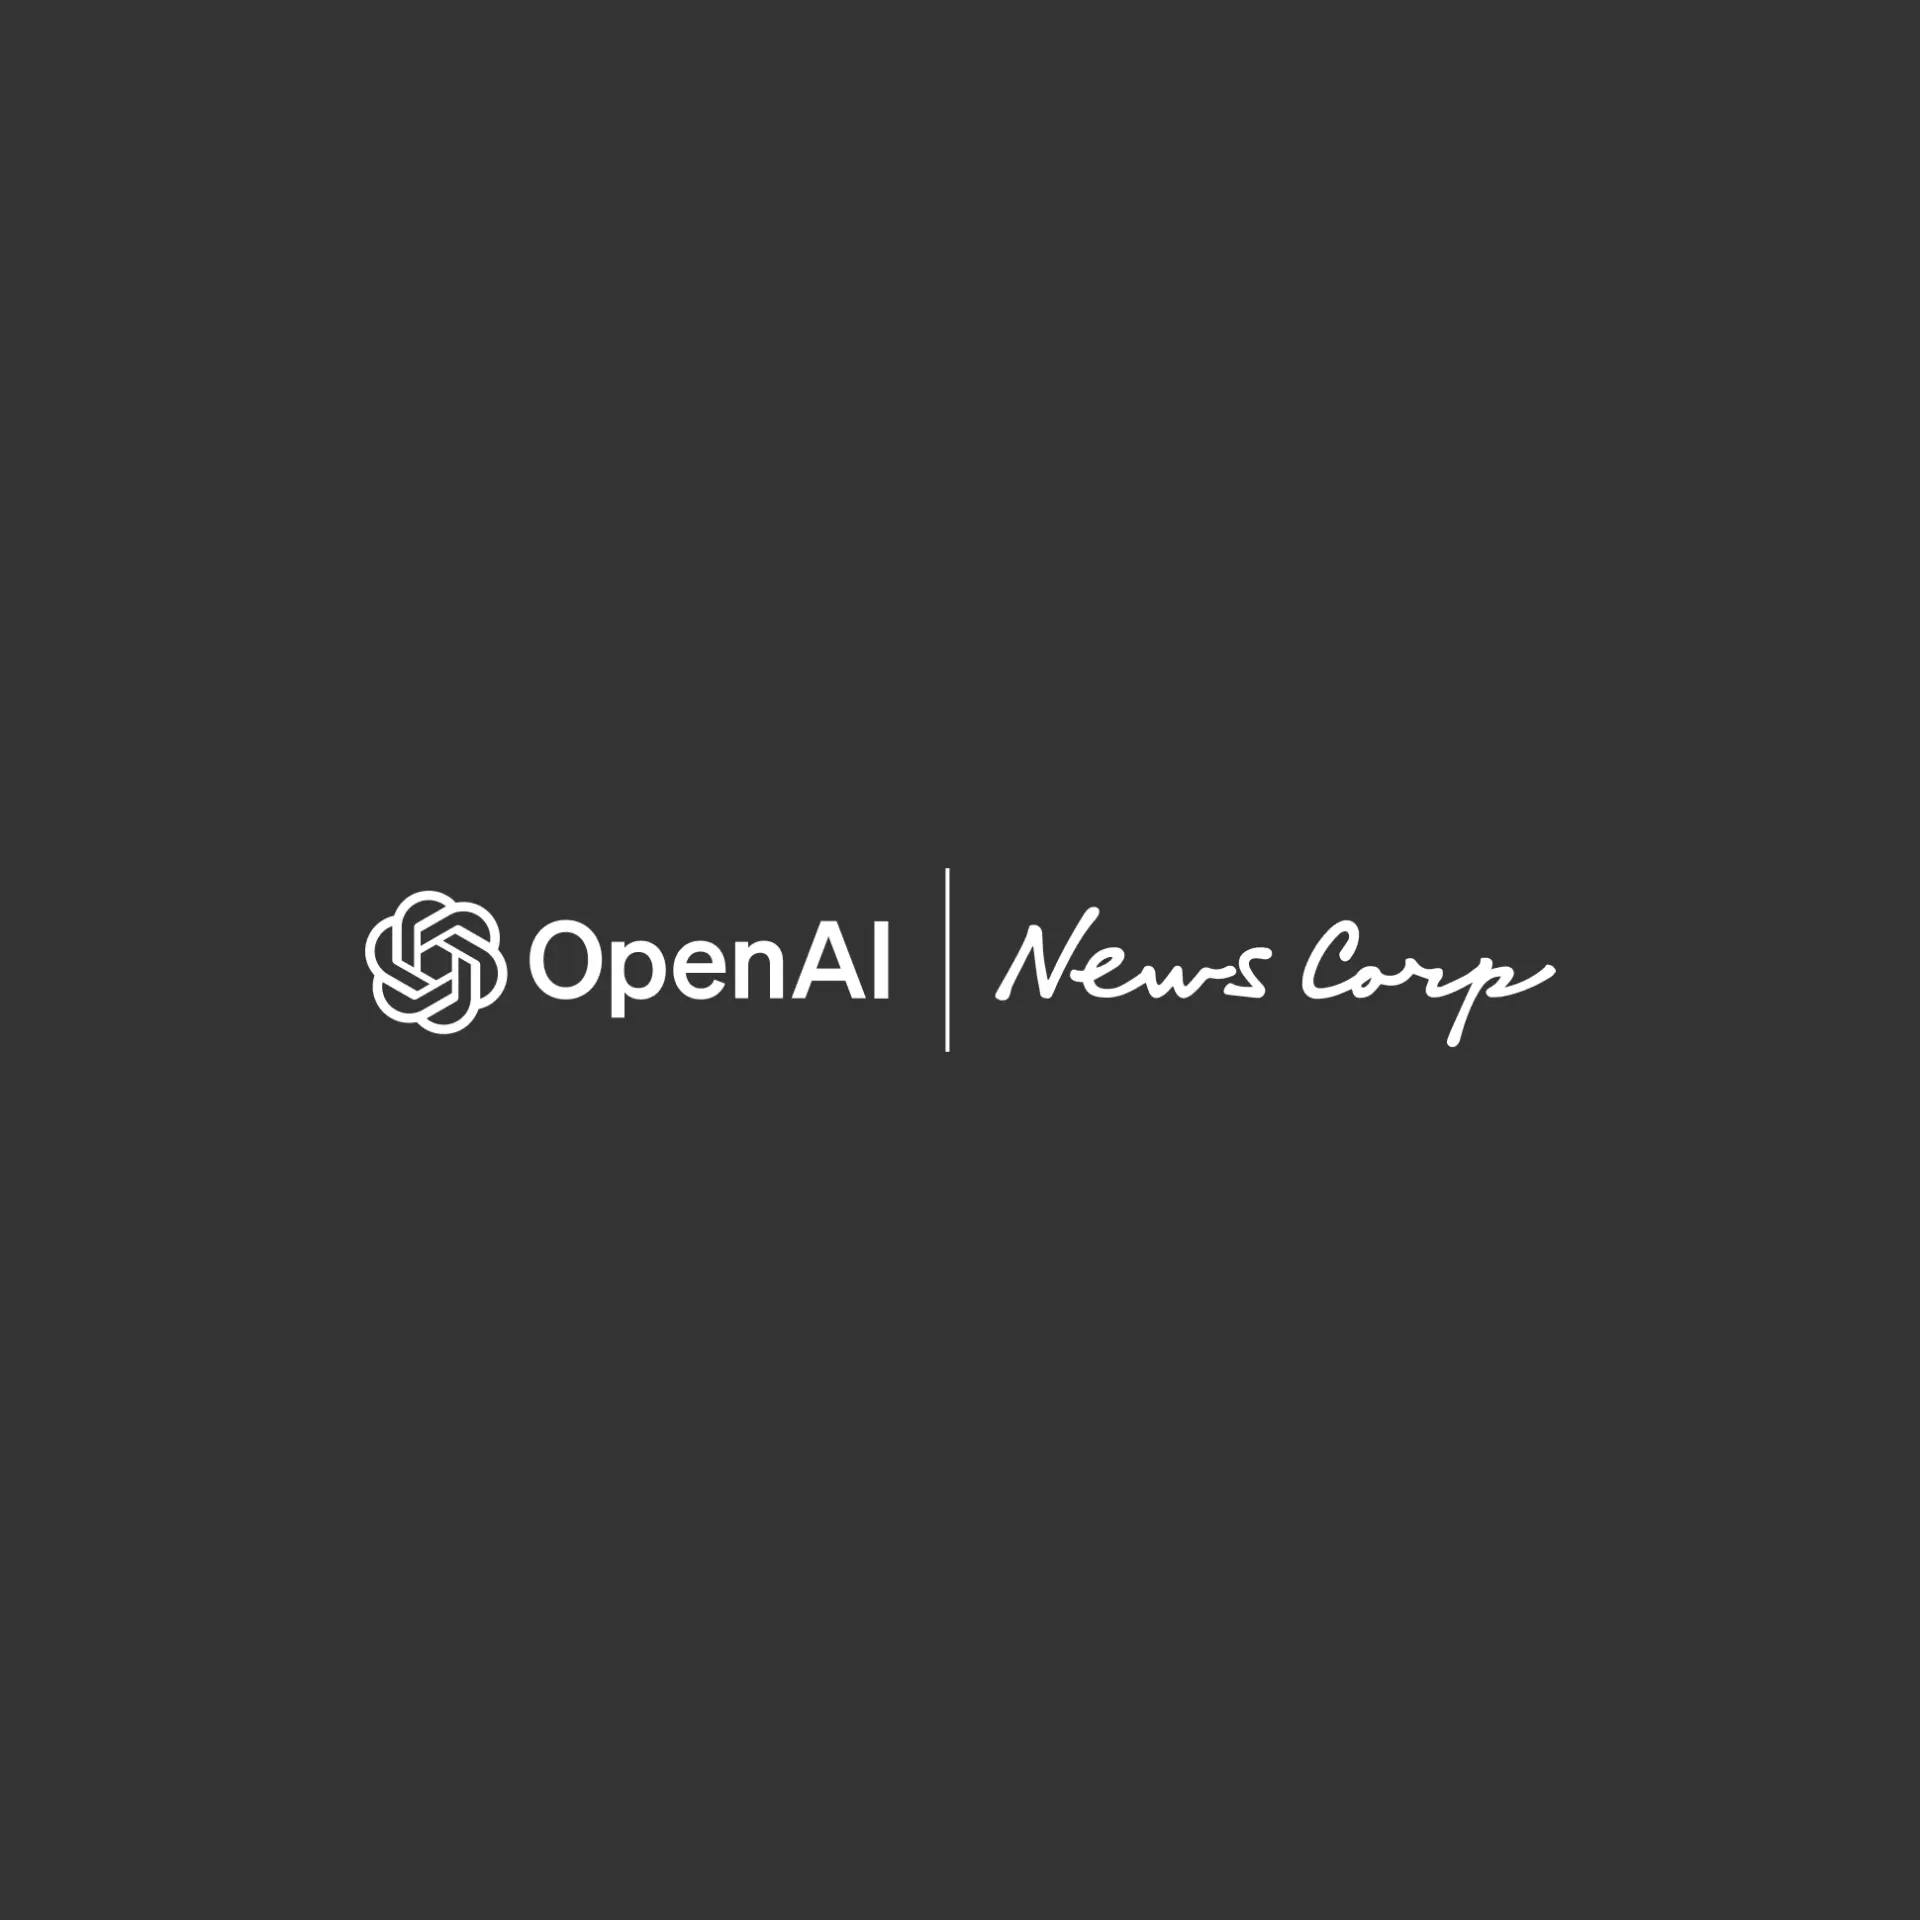 OpenAI scored a strategic partnership with News Corp